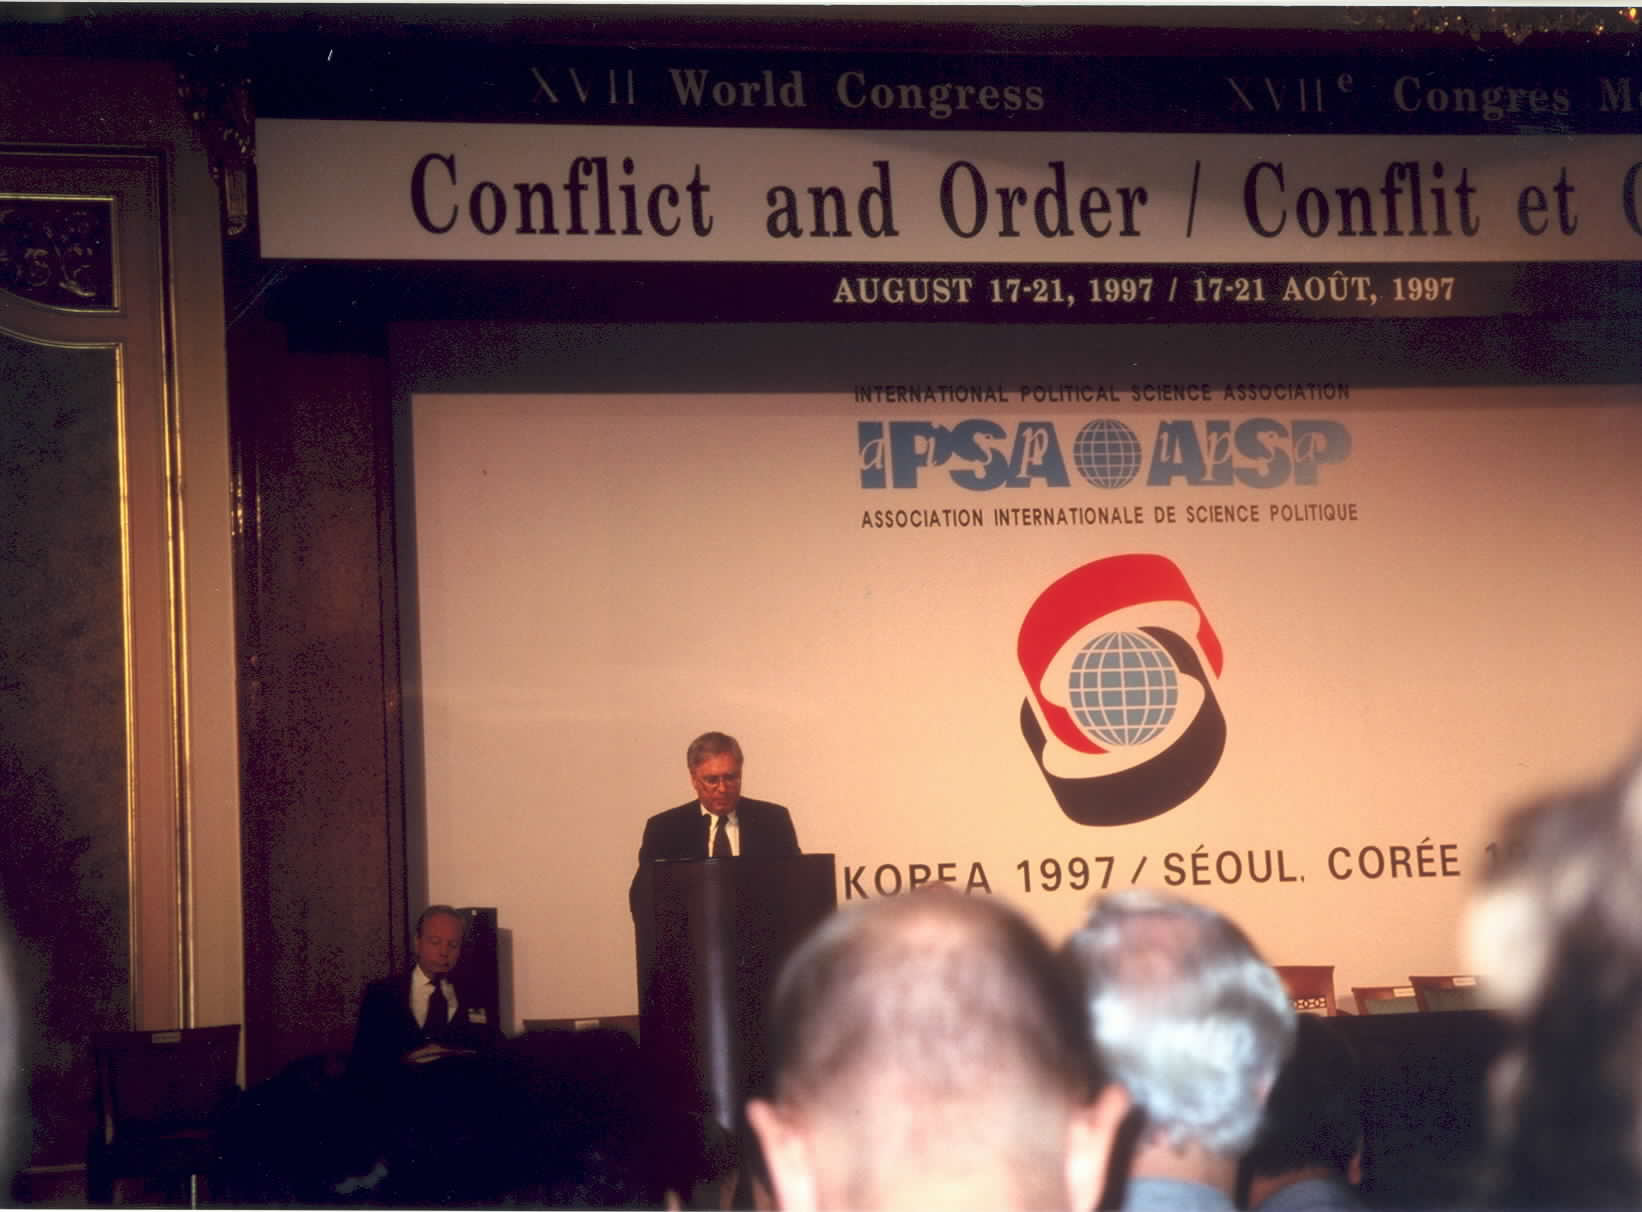 IPSA congress, Seoul, 1997